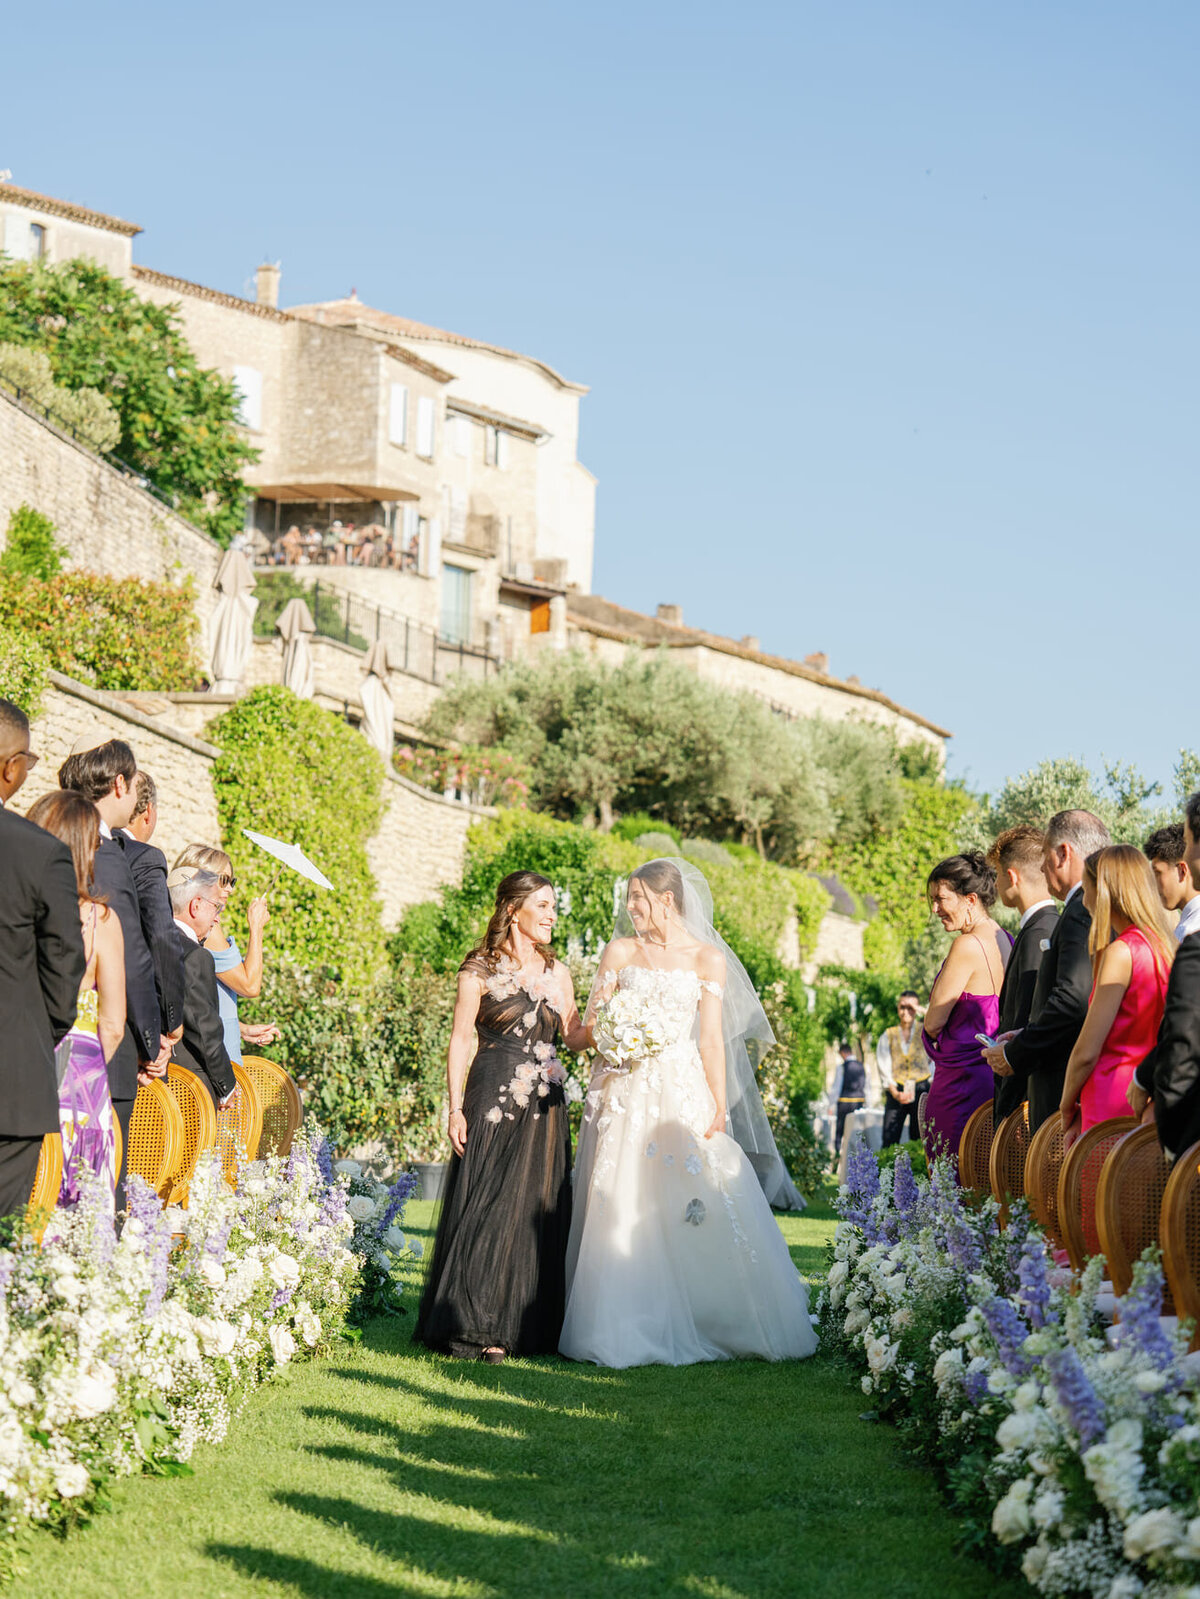 bespoke-garden-style-wedding-ceremony-in-france